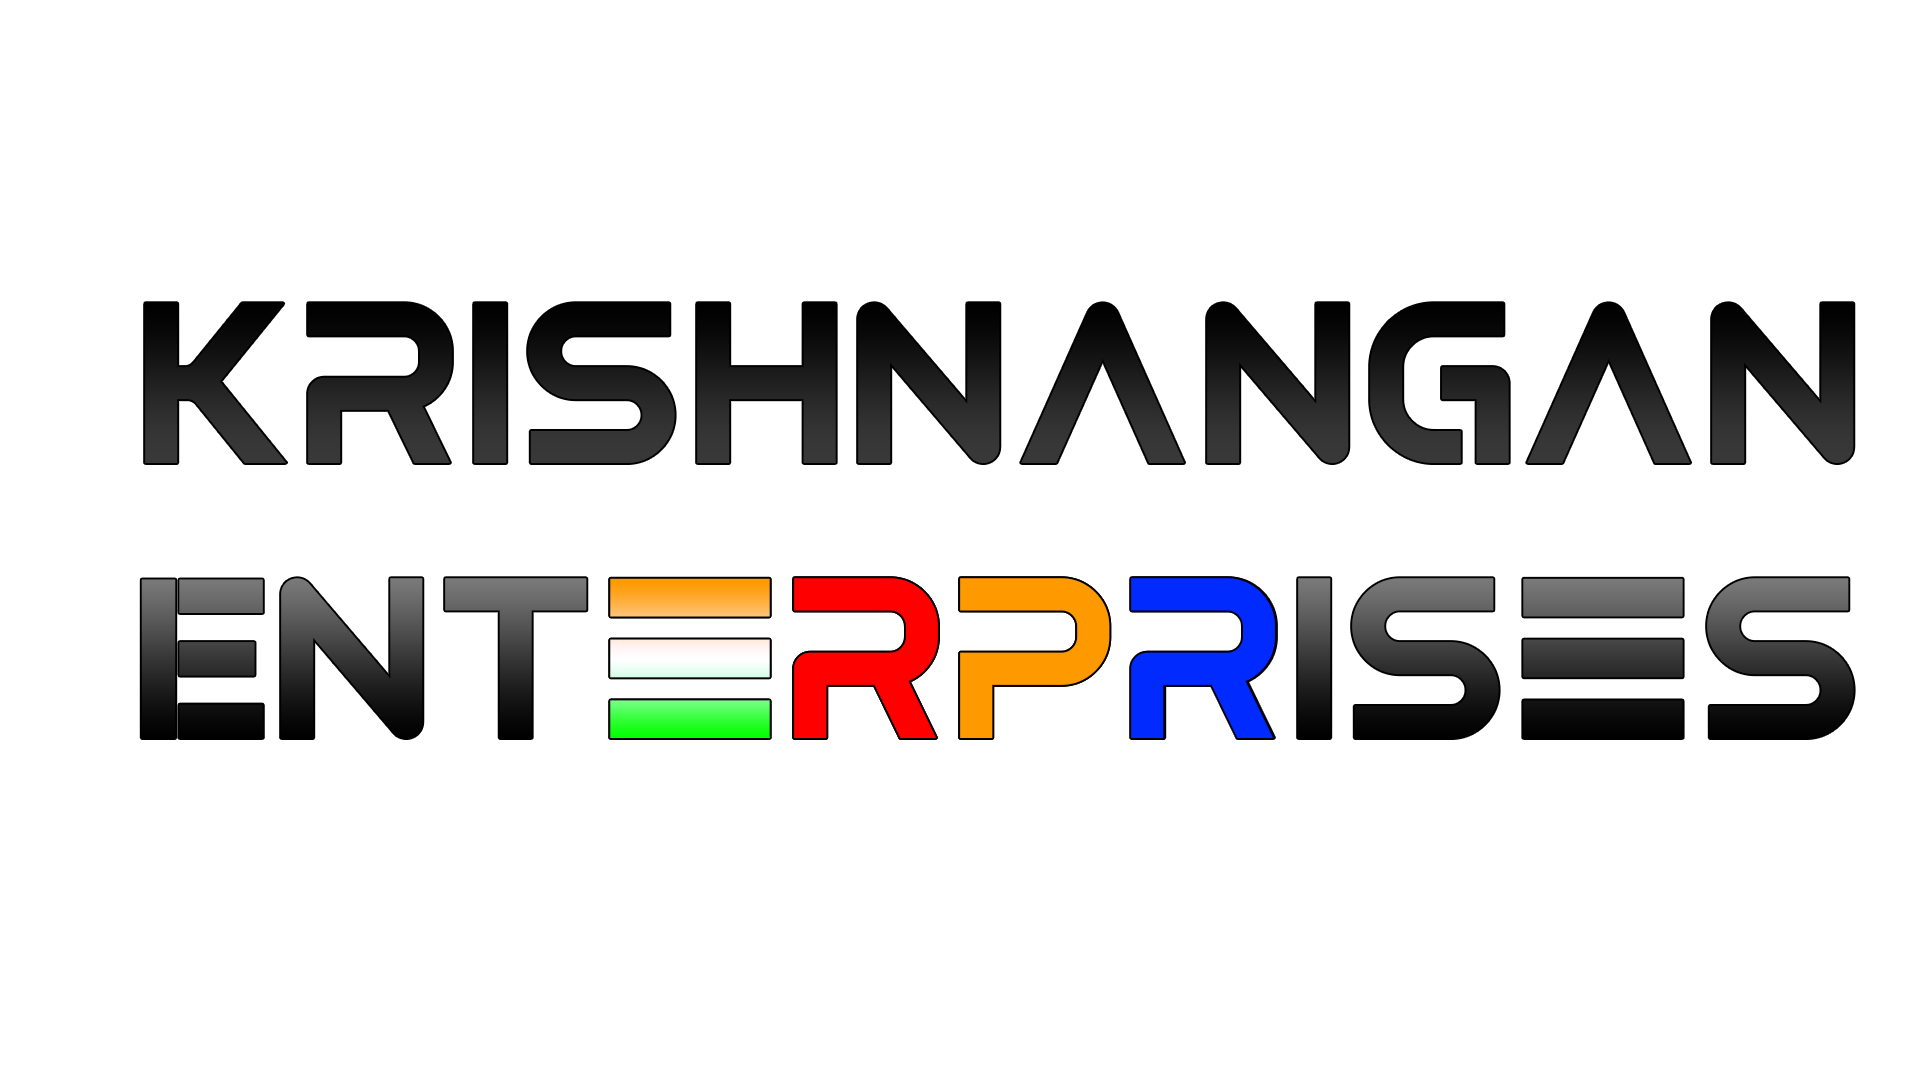 Krishnangan Enterprises